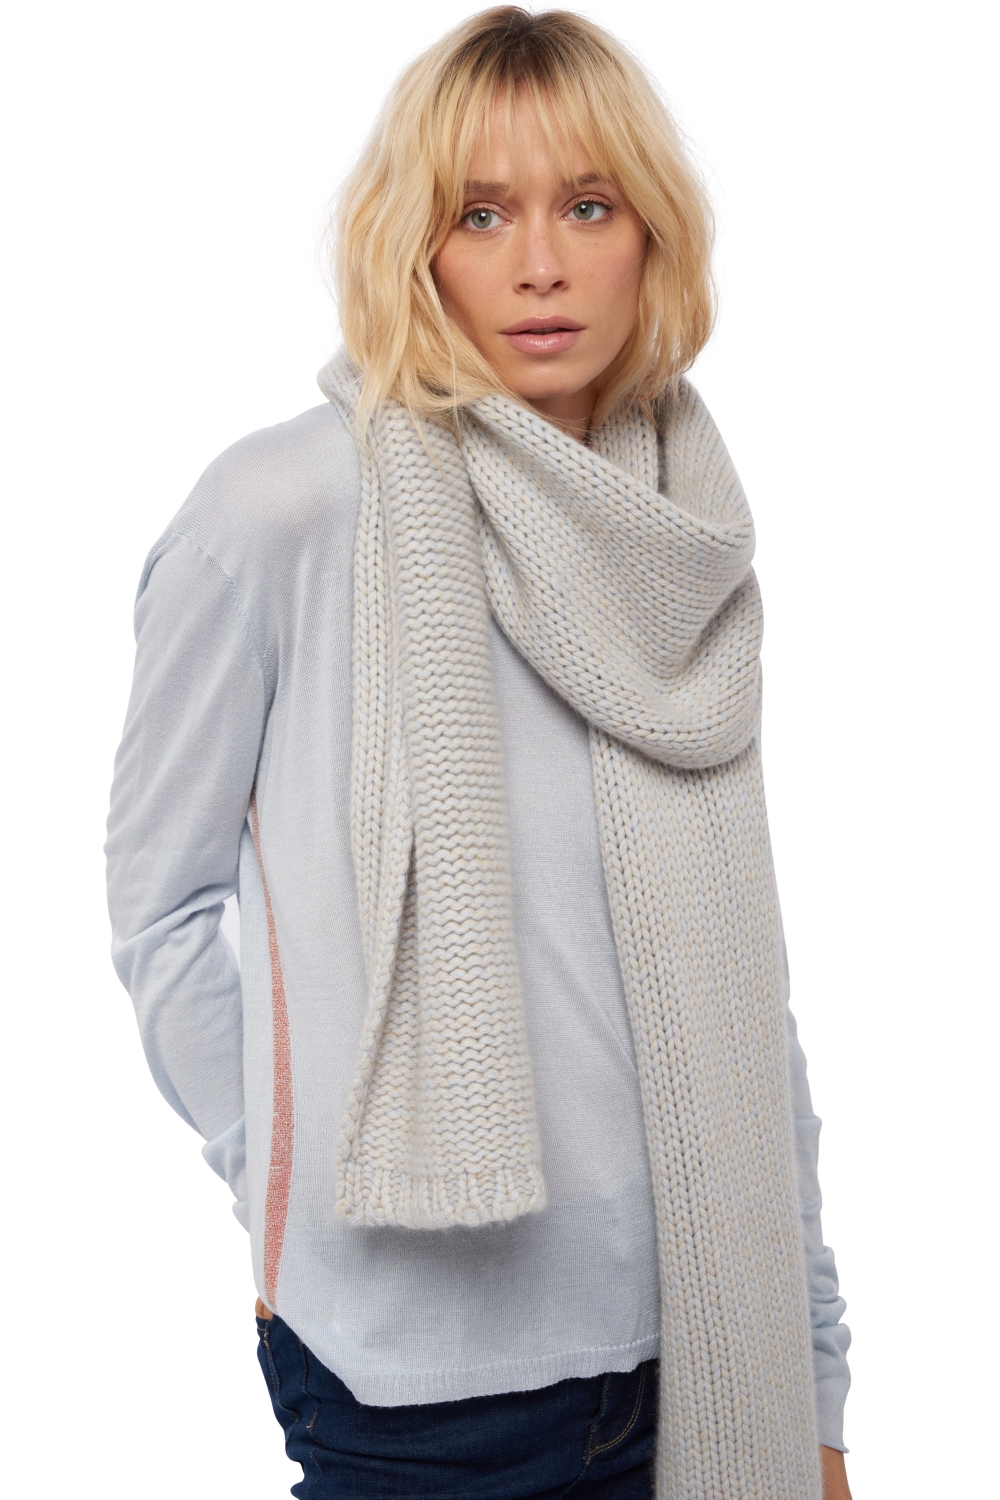 Cashmere accessories scarves mufflers venus ciel natural beige 200 x 38 cm